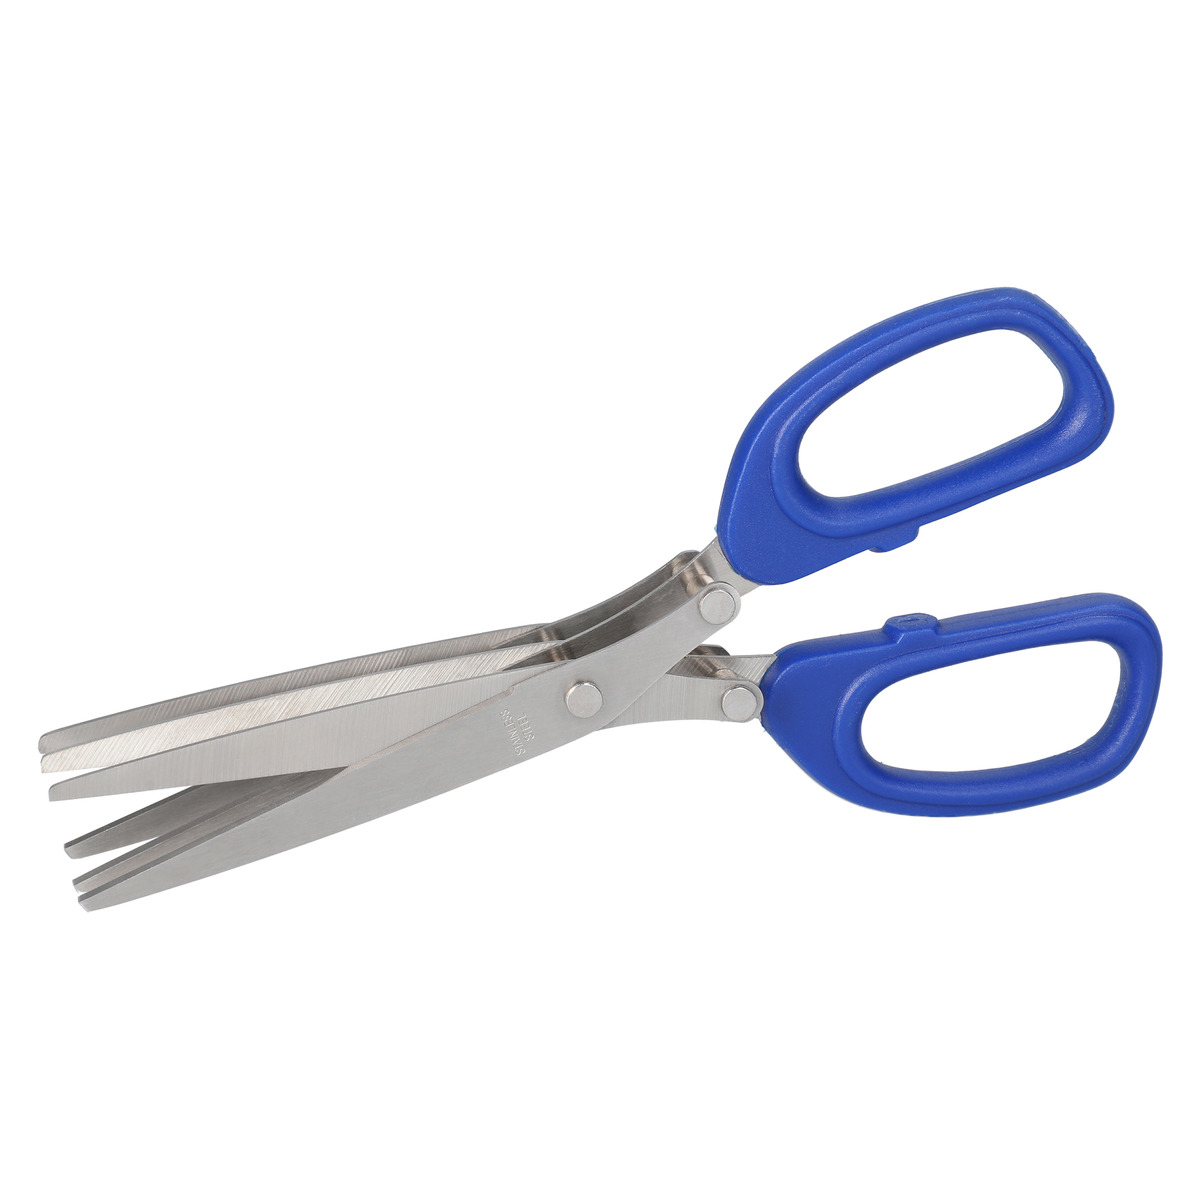 Mikado Scissors - FOR WORMS CUTTING